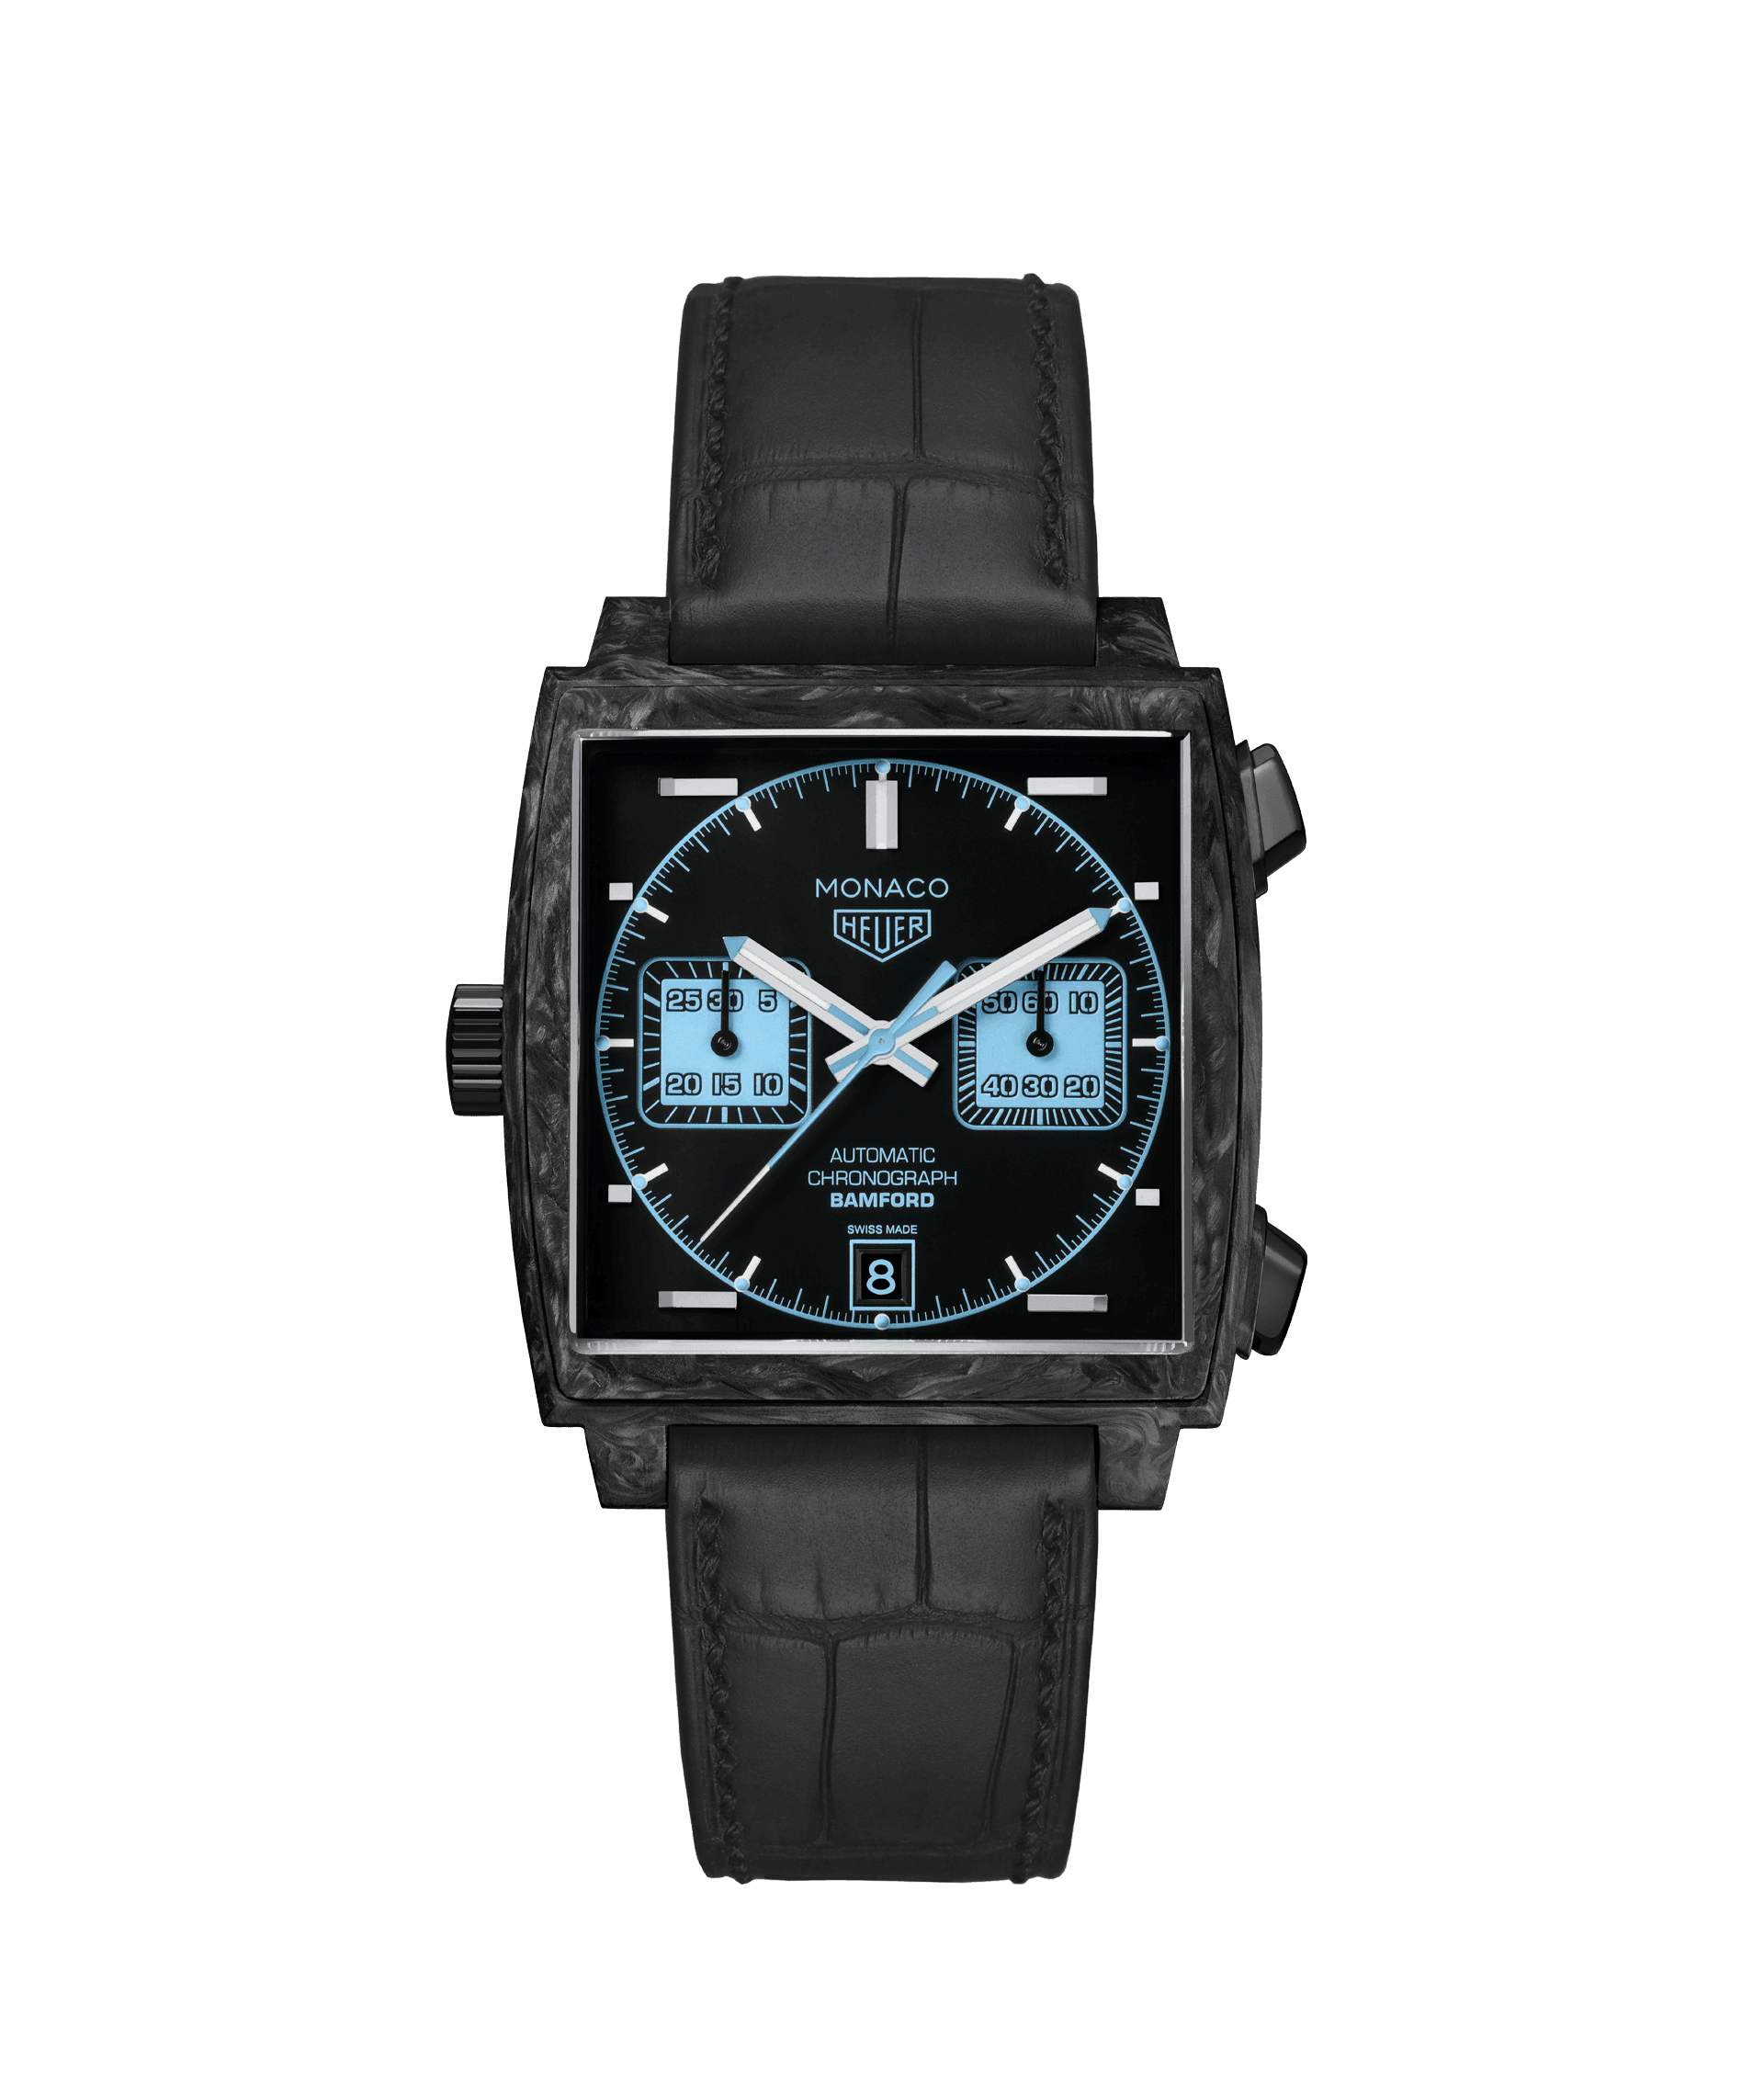 Tag heuer monaco bamford limited edition watch